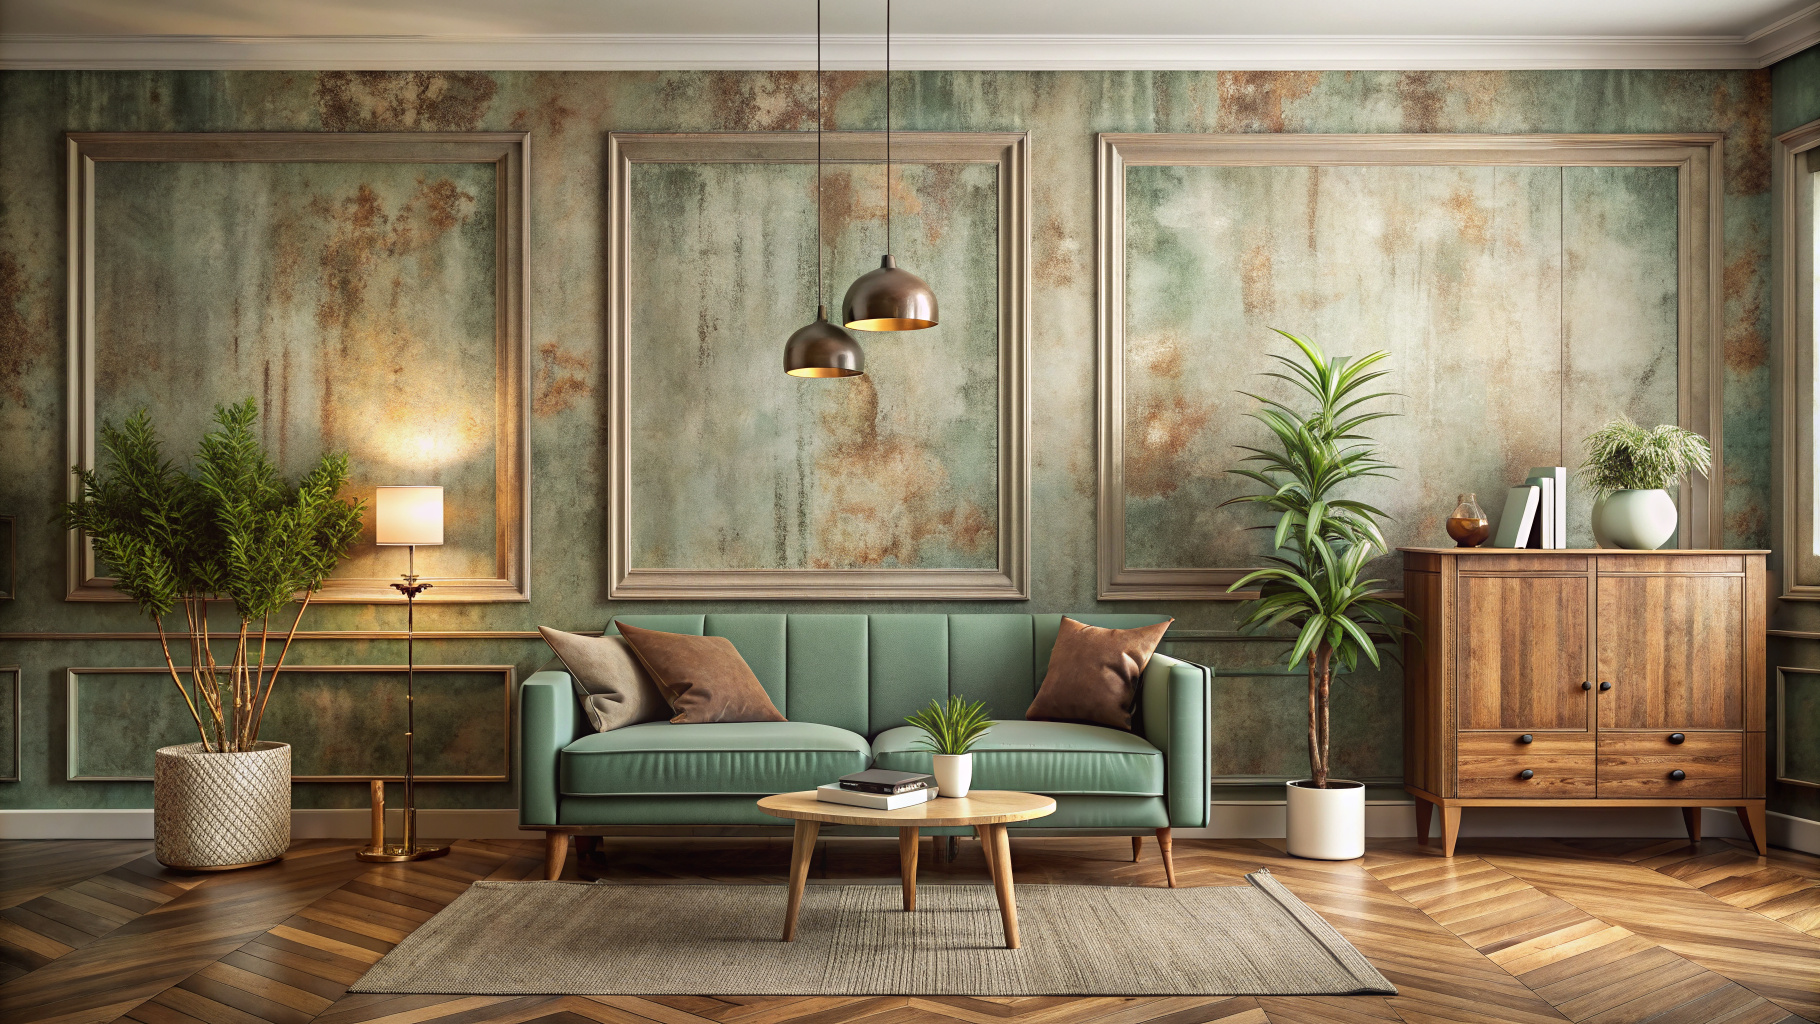 vintage interior wall in minimal style